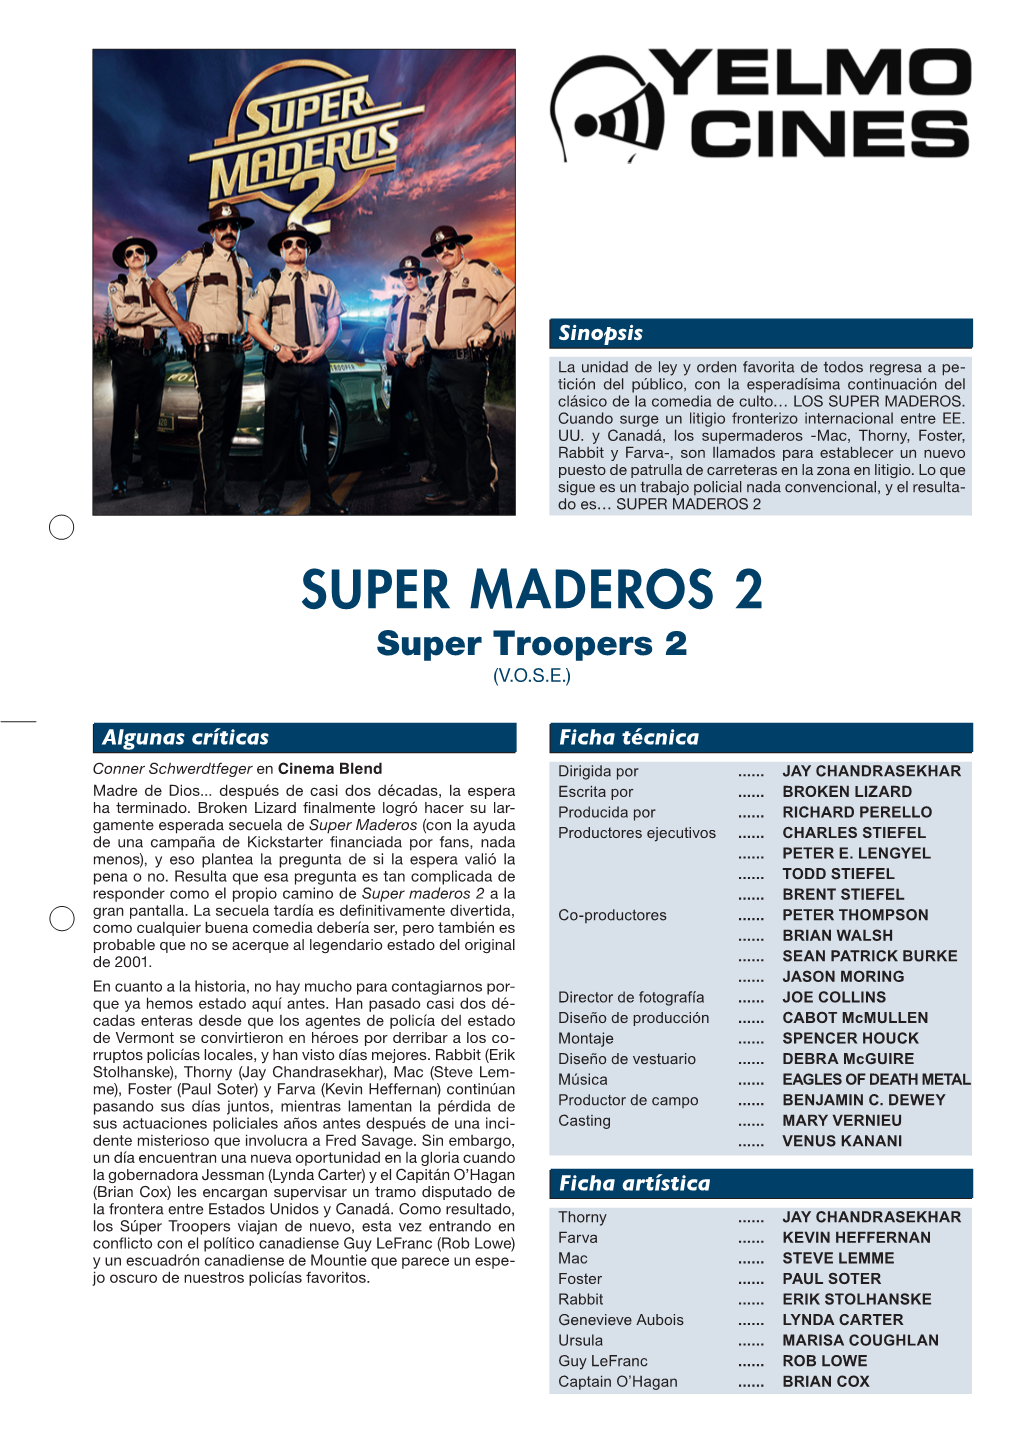 Super Maderos 2